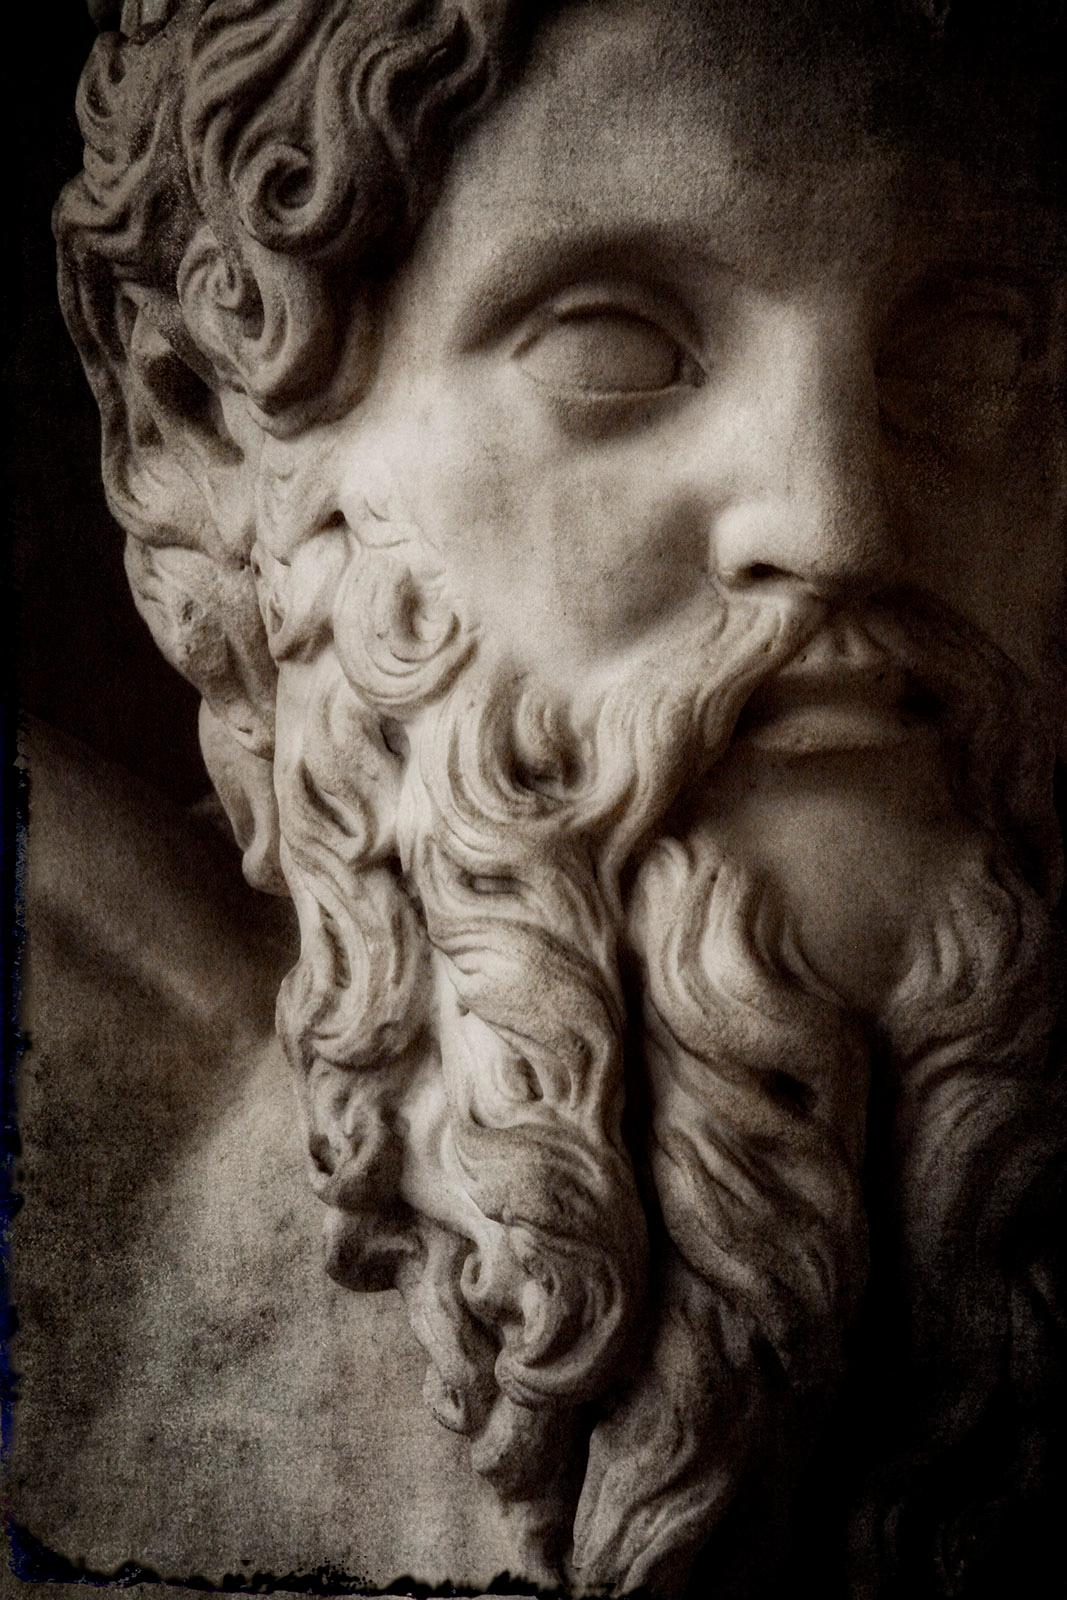 Michael Banks Still-Life Photograph - Italia 2 - Signed limited edition pigment print, Sculpture, Greek god, Mythology